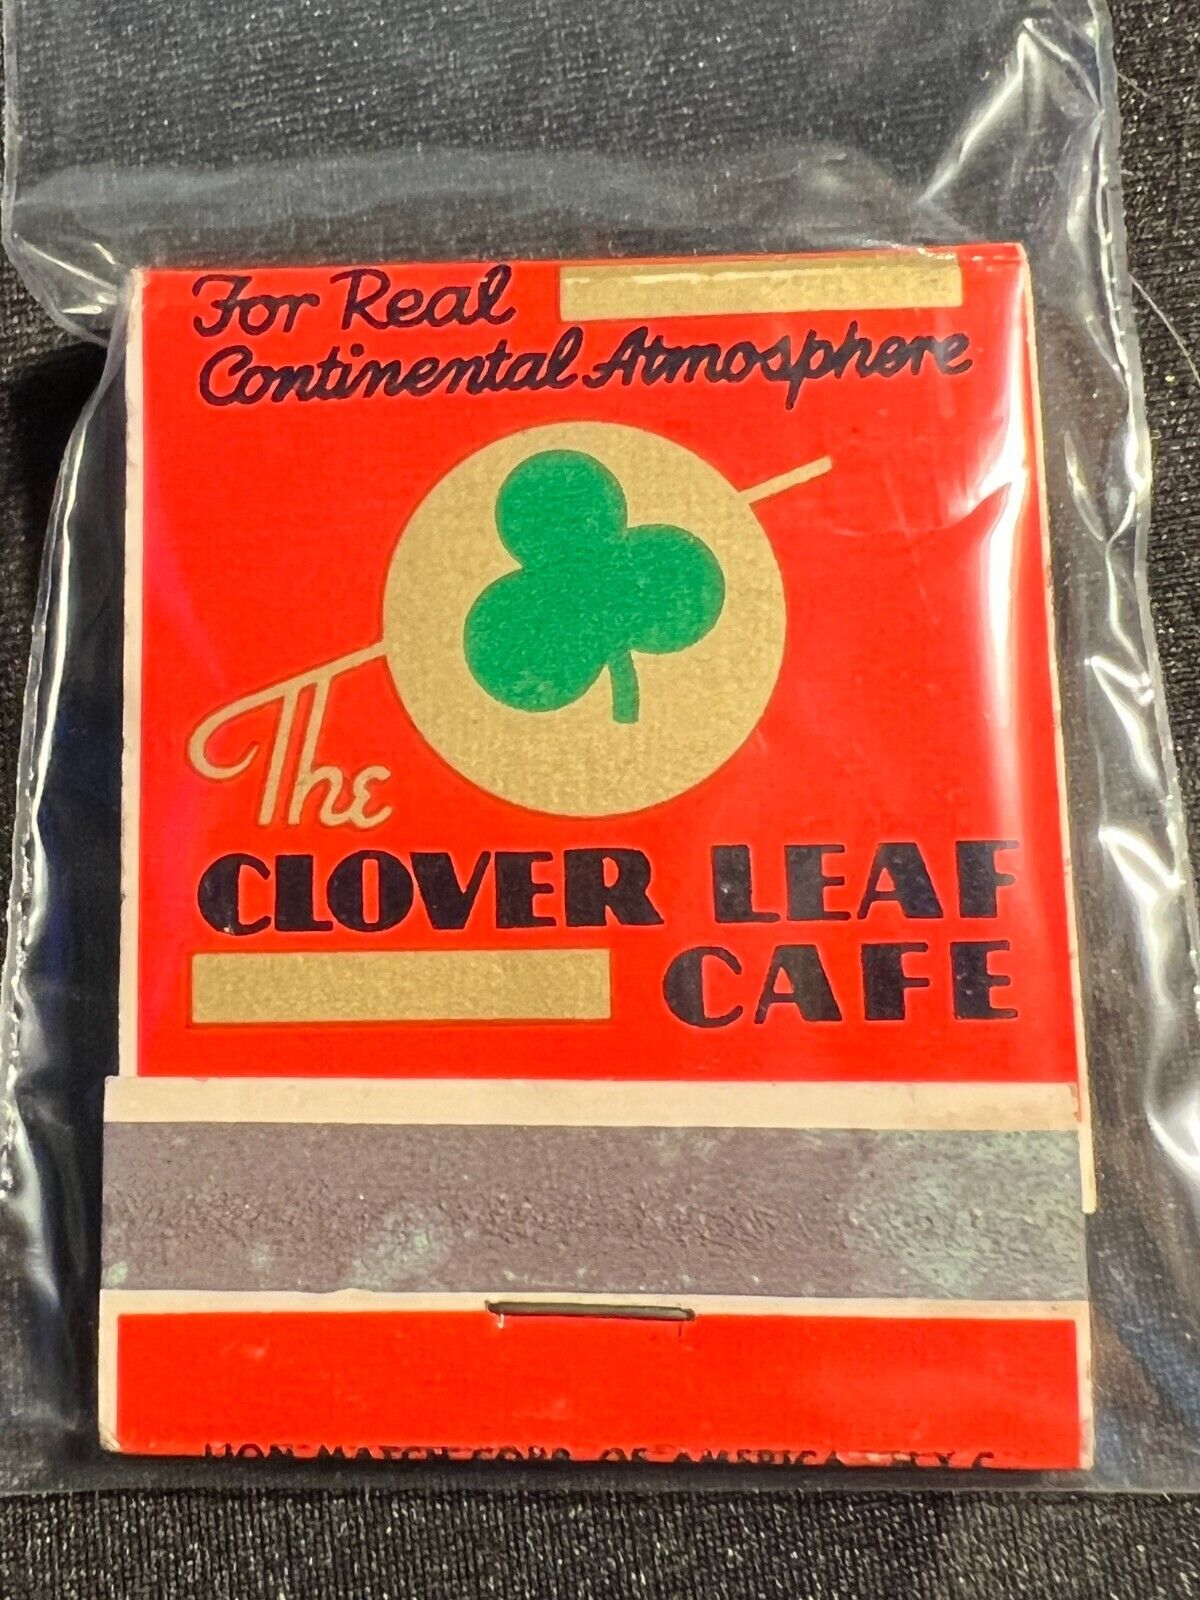 VINTAGE MATCHBOOK - THE CLOVER LEAF CAFE - NEW YORK, NY - UNSTRUCK BEAUTY